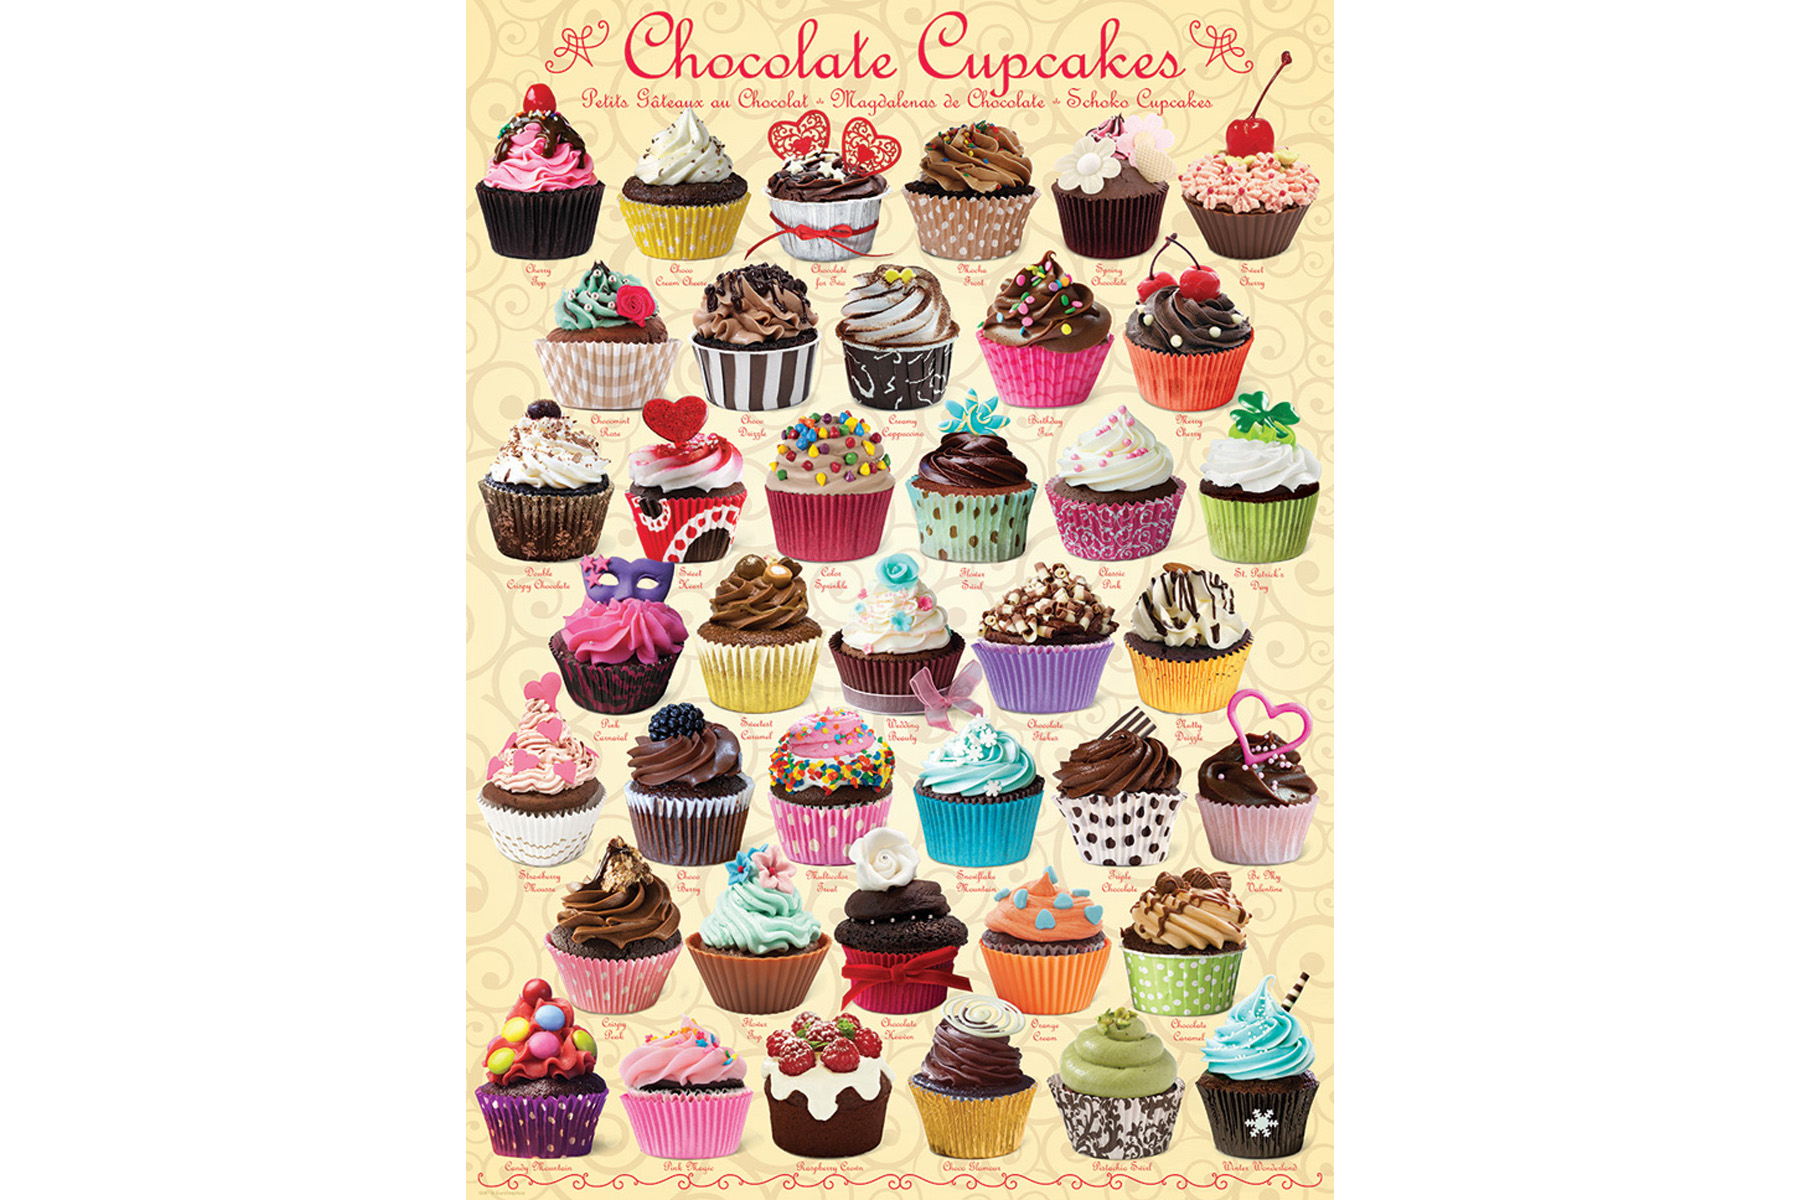 Schokoladen Teile Puzzle Cupcakes - 1000